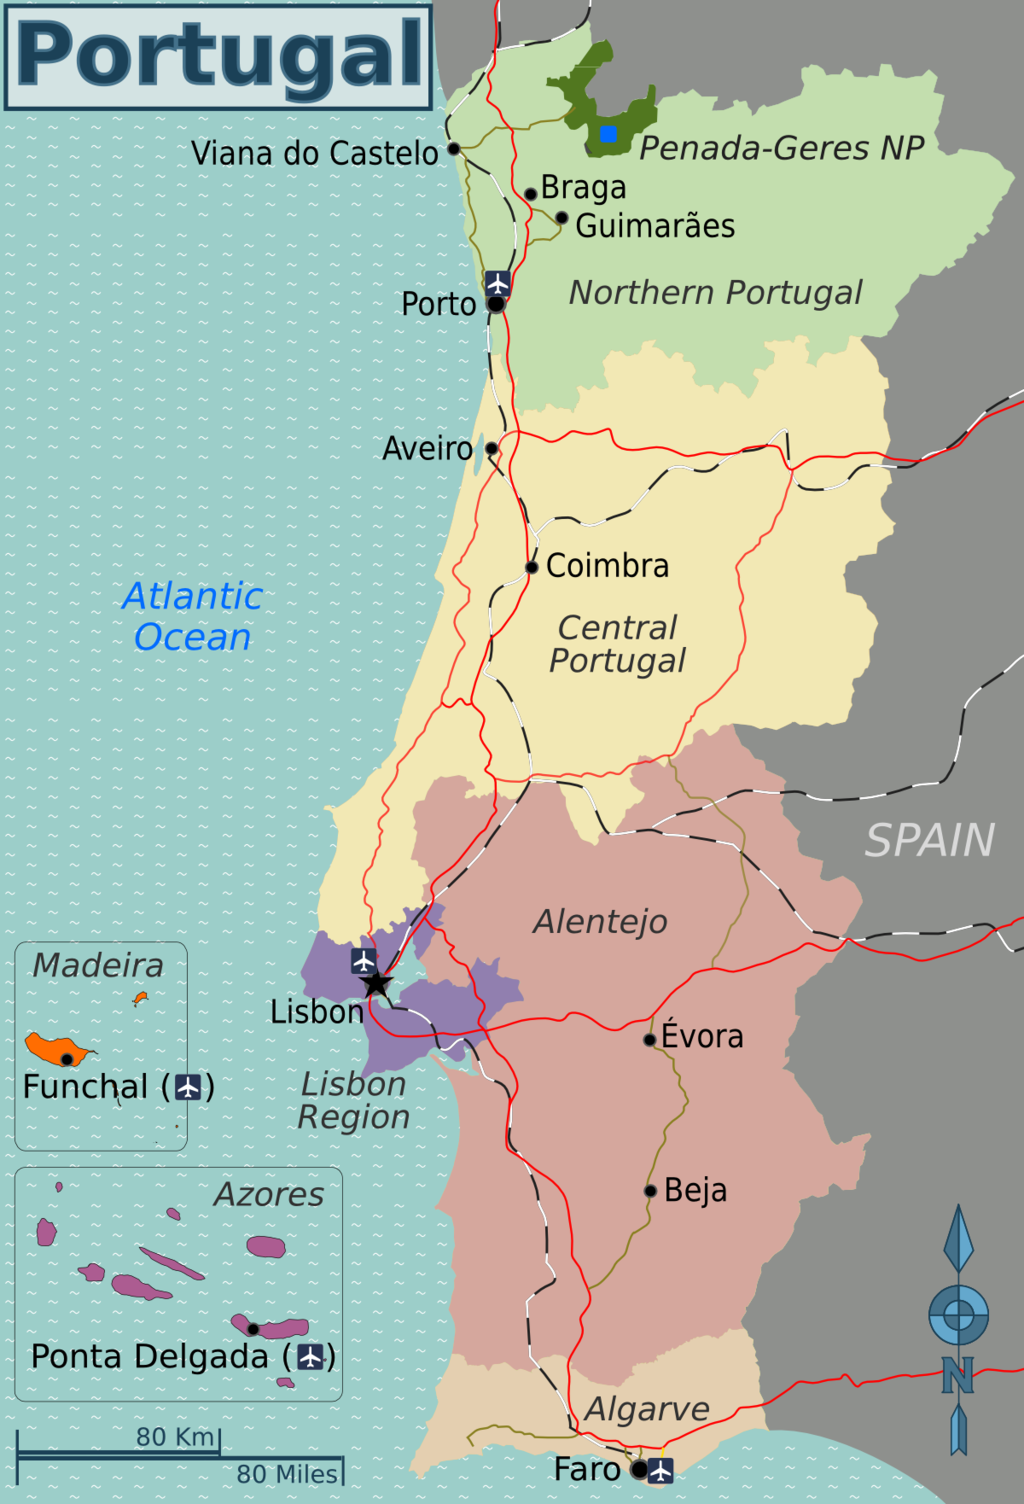 Algarve - Wikimedia Commons